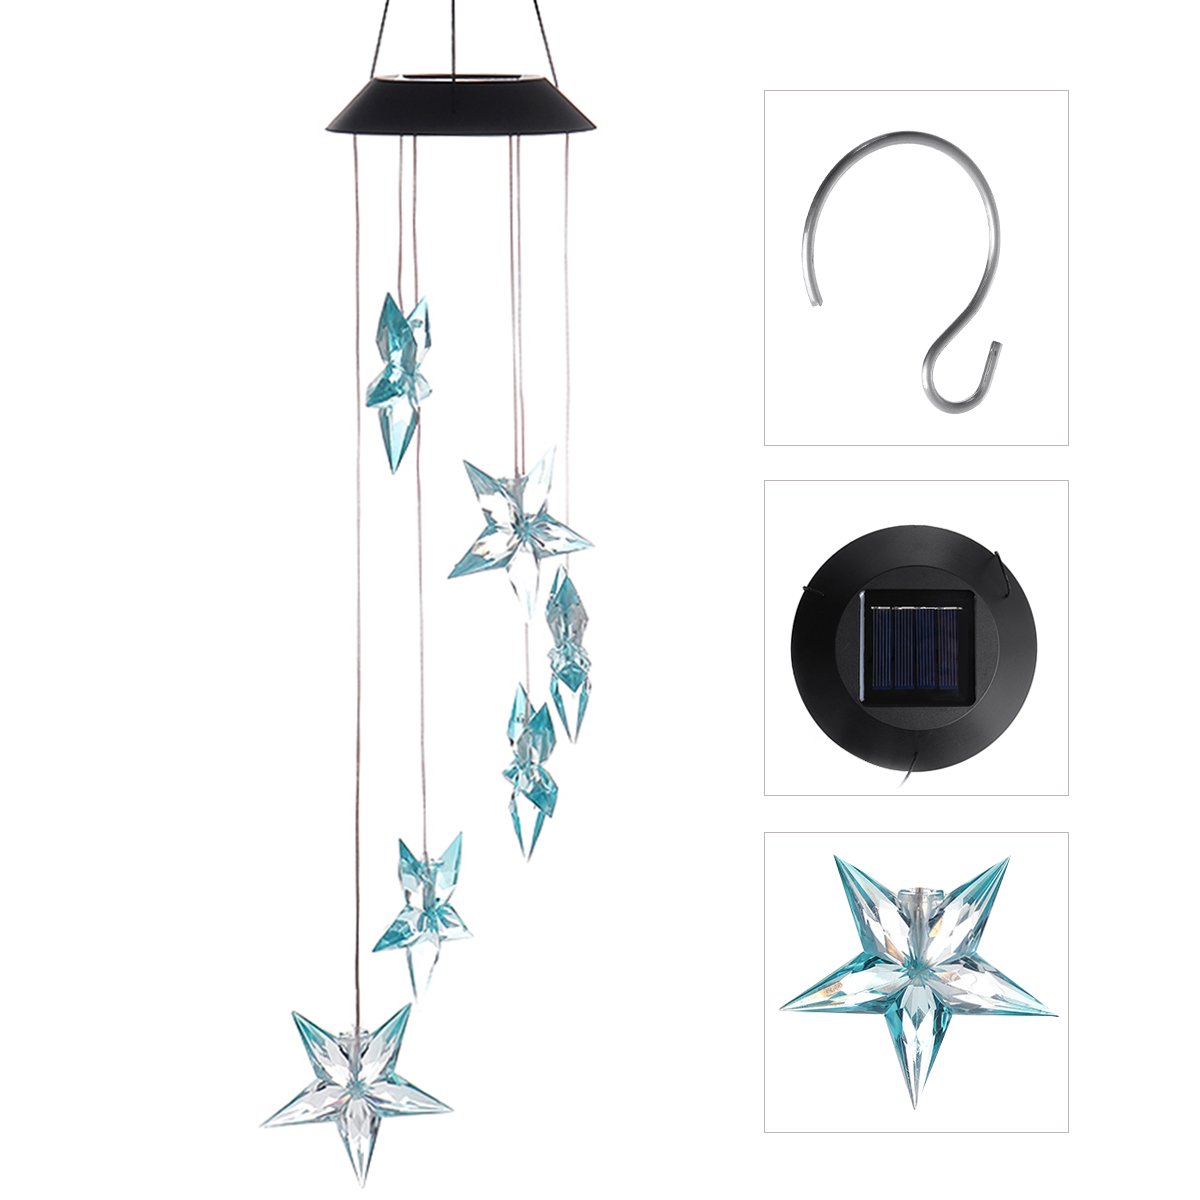 Solor-Powered-Star-Wind-Chime-Light-Outdoor-Garden-Waterproof-Hanging-Lamp-Decor-1698743-10